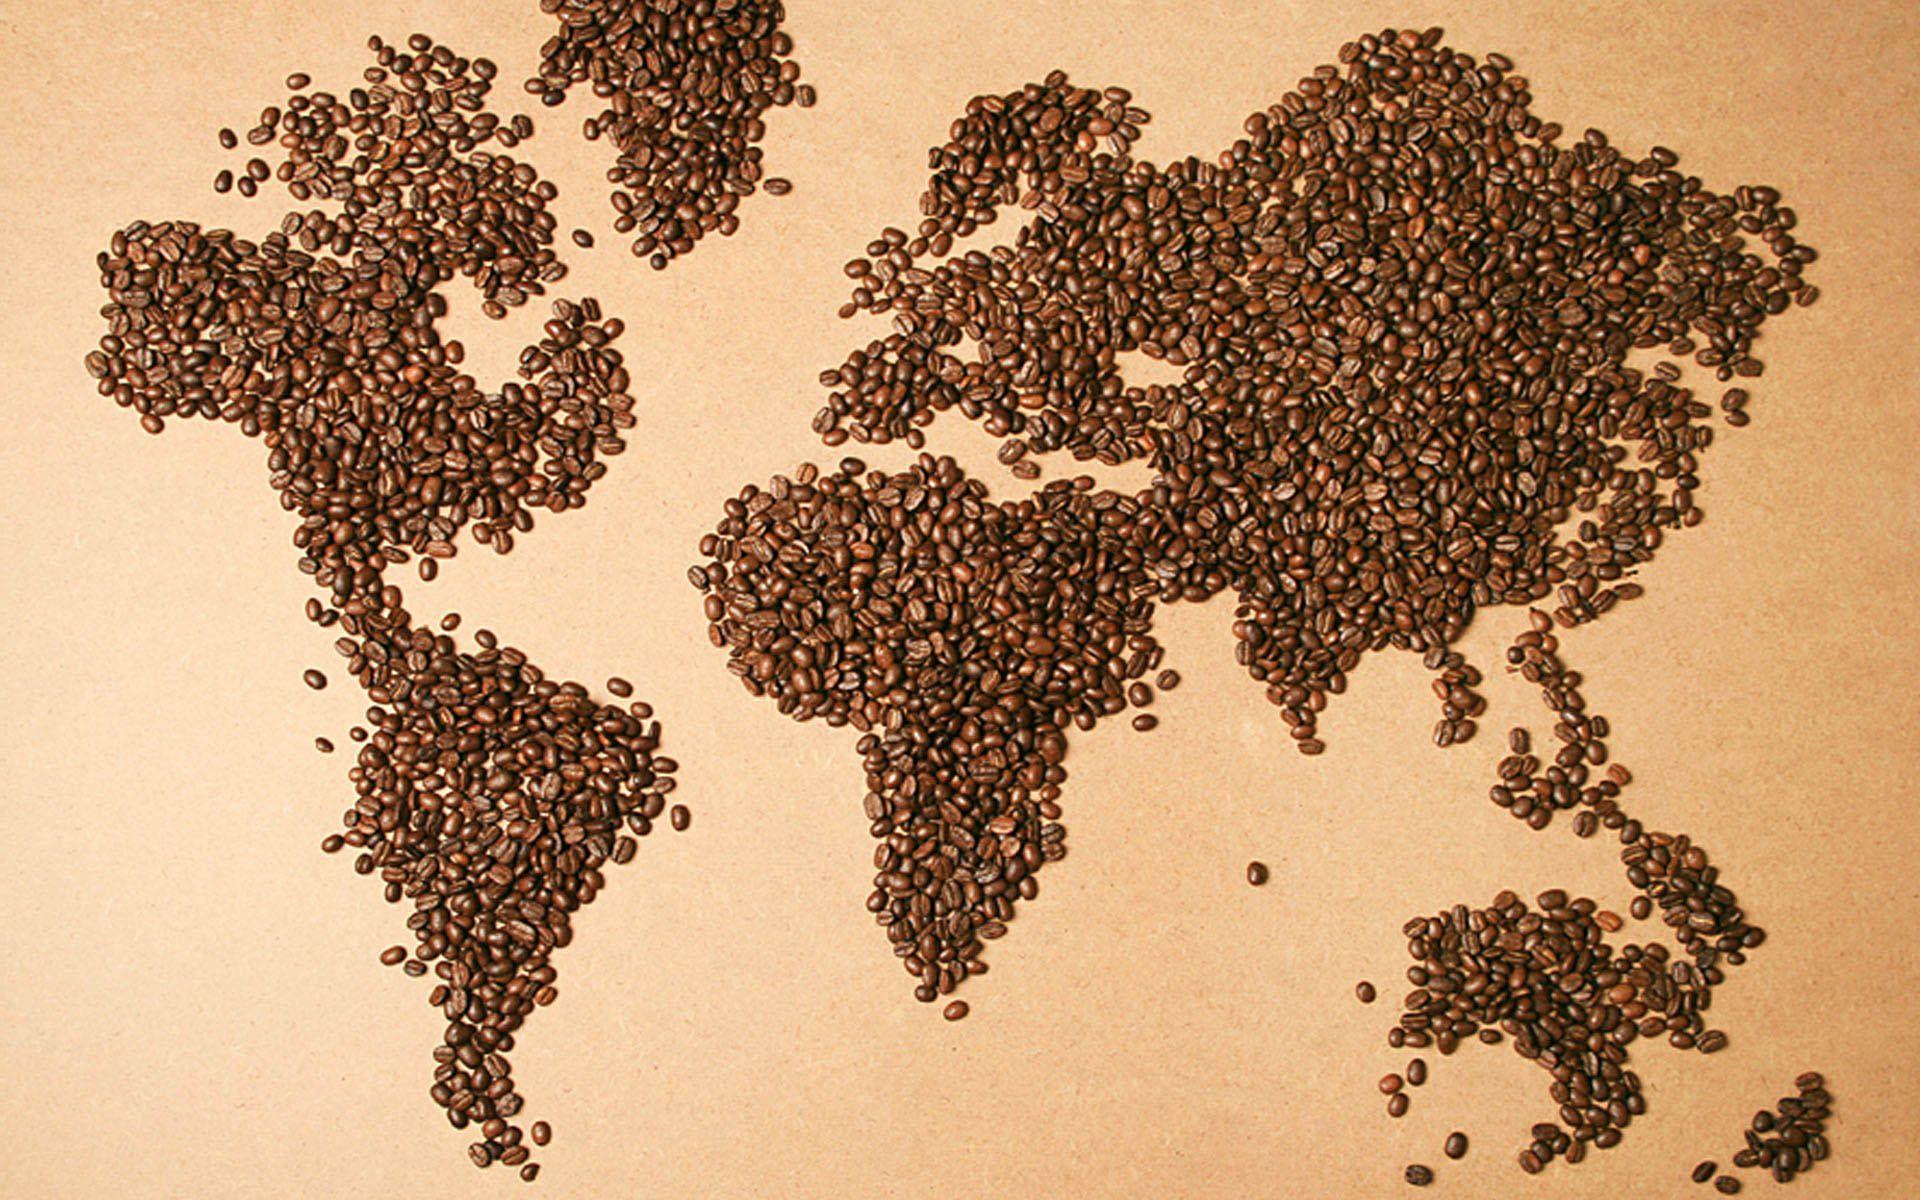 Global Coffee Forum